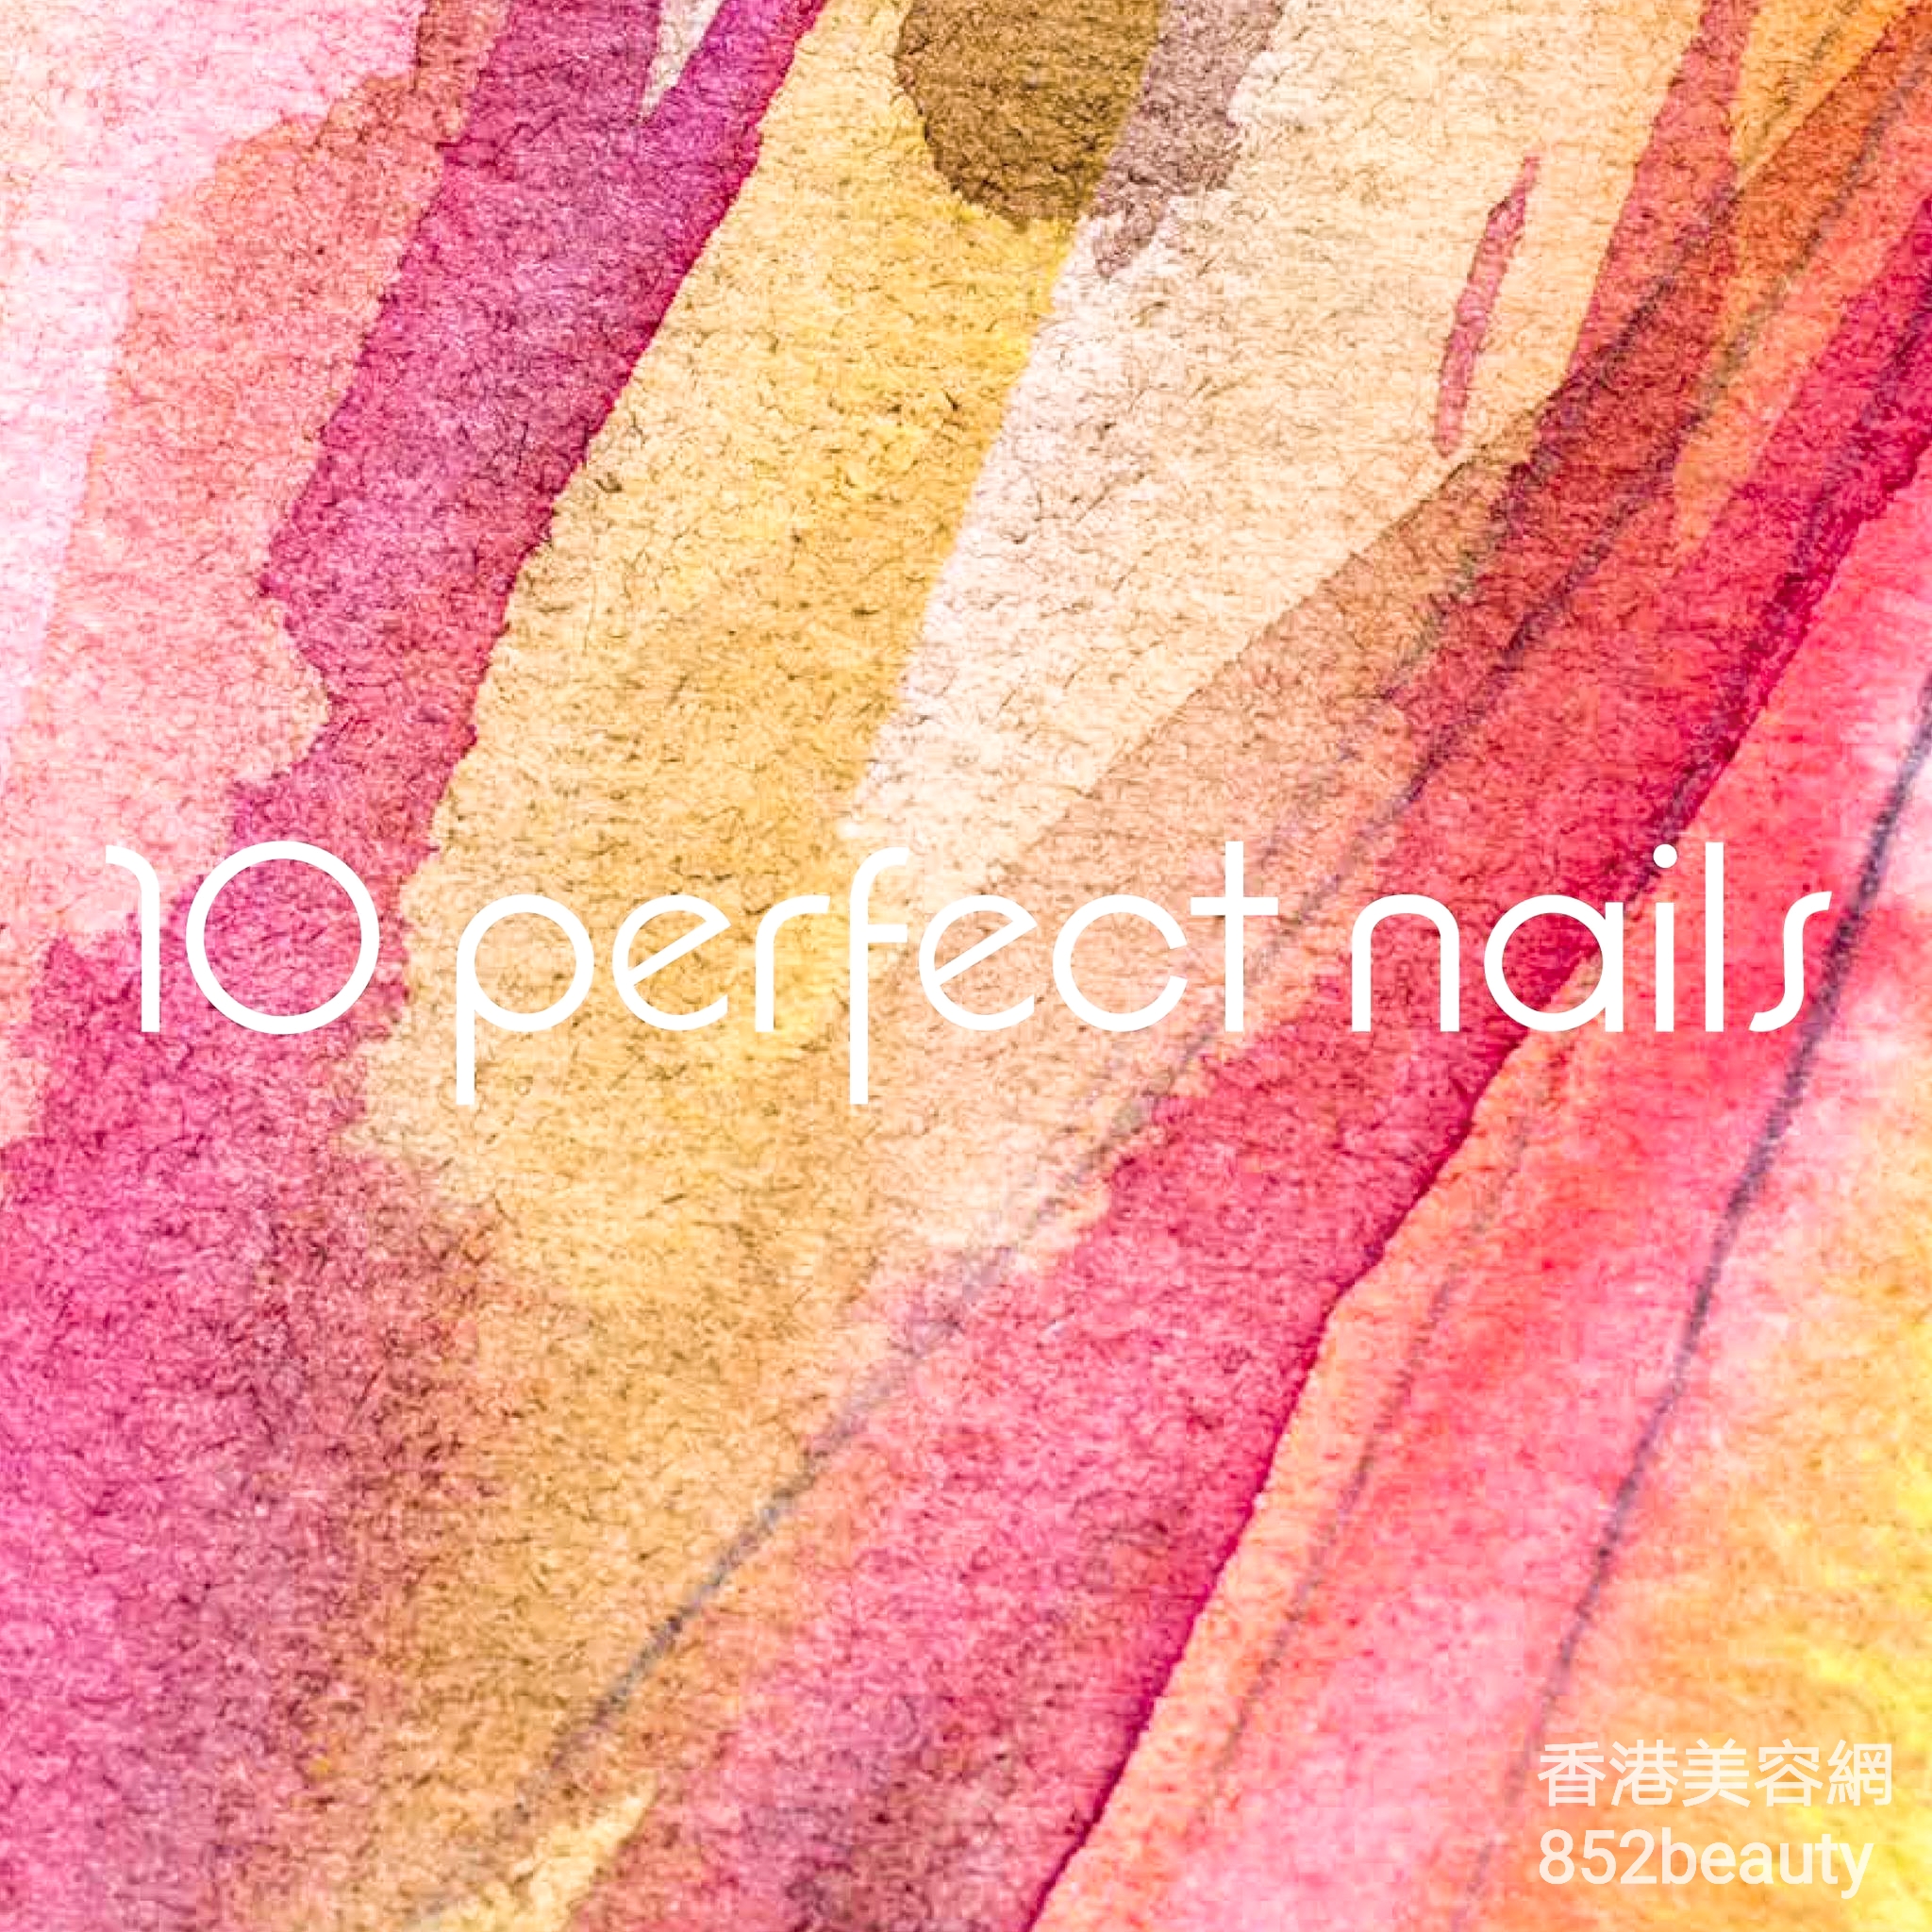 : 10 Perfect Nails (中環店)